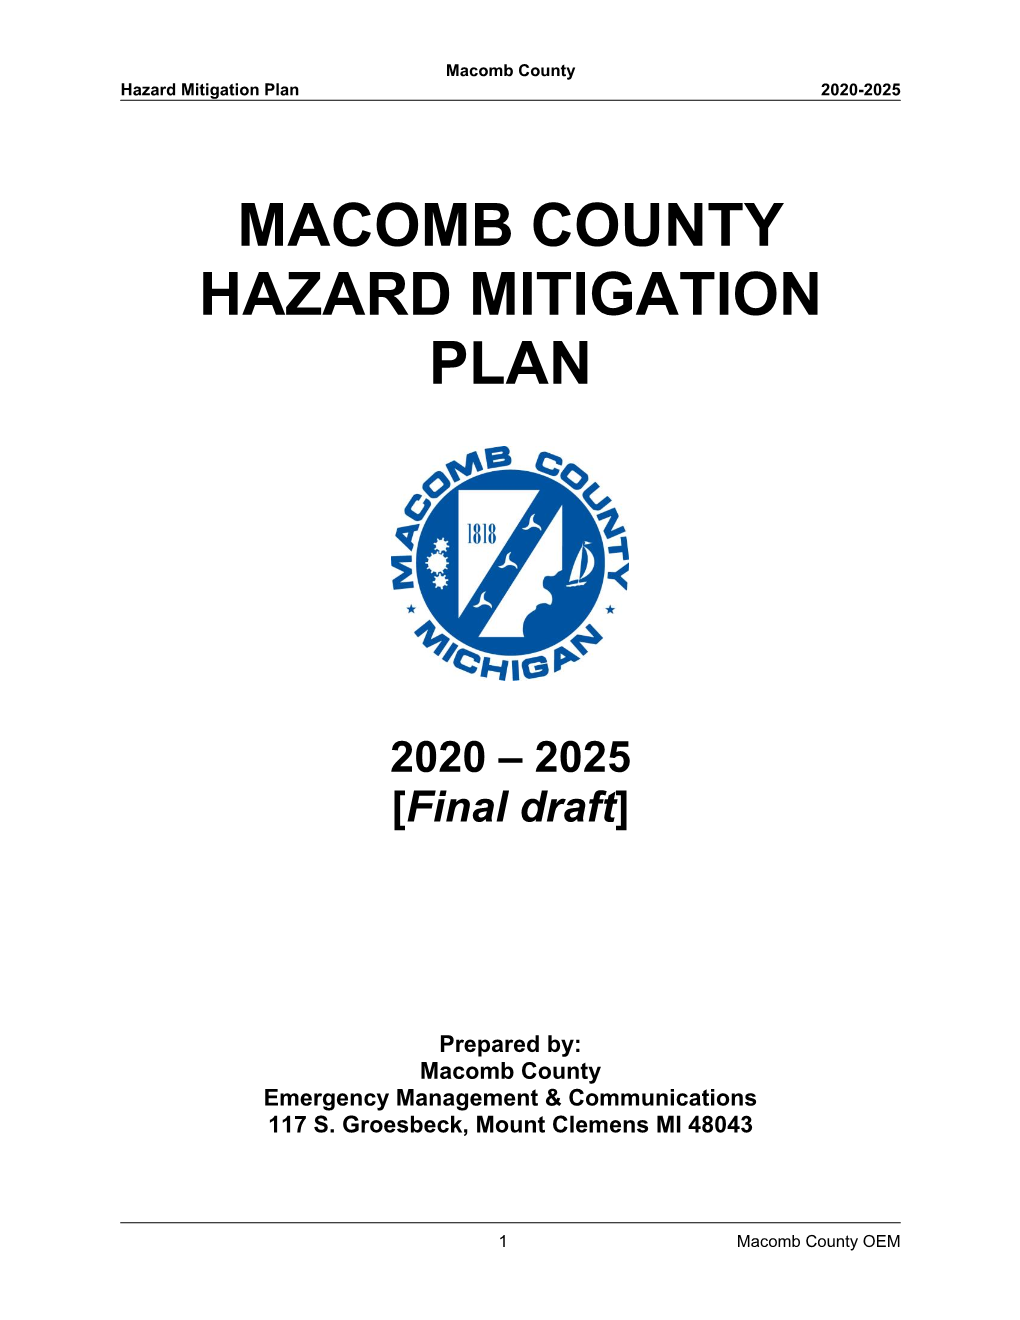 Macomb County Hazard Mitigation Plan 2020-2025